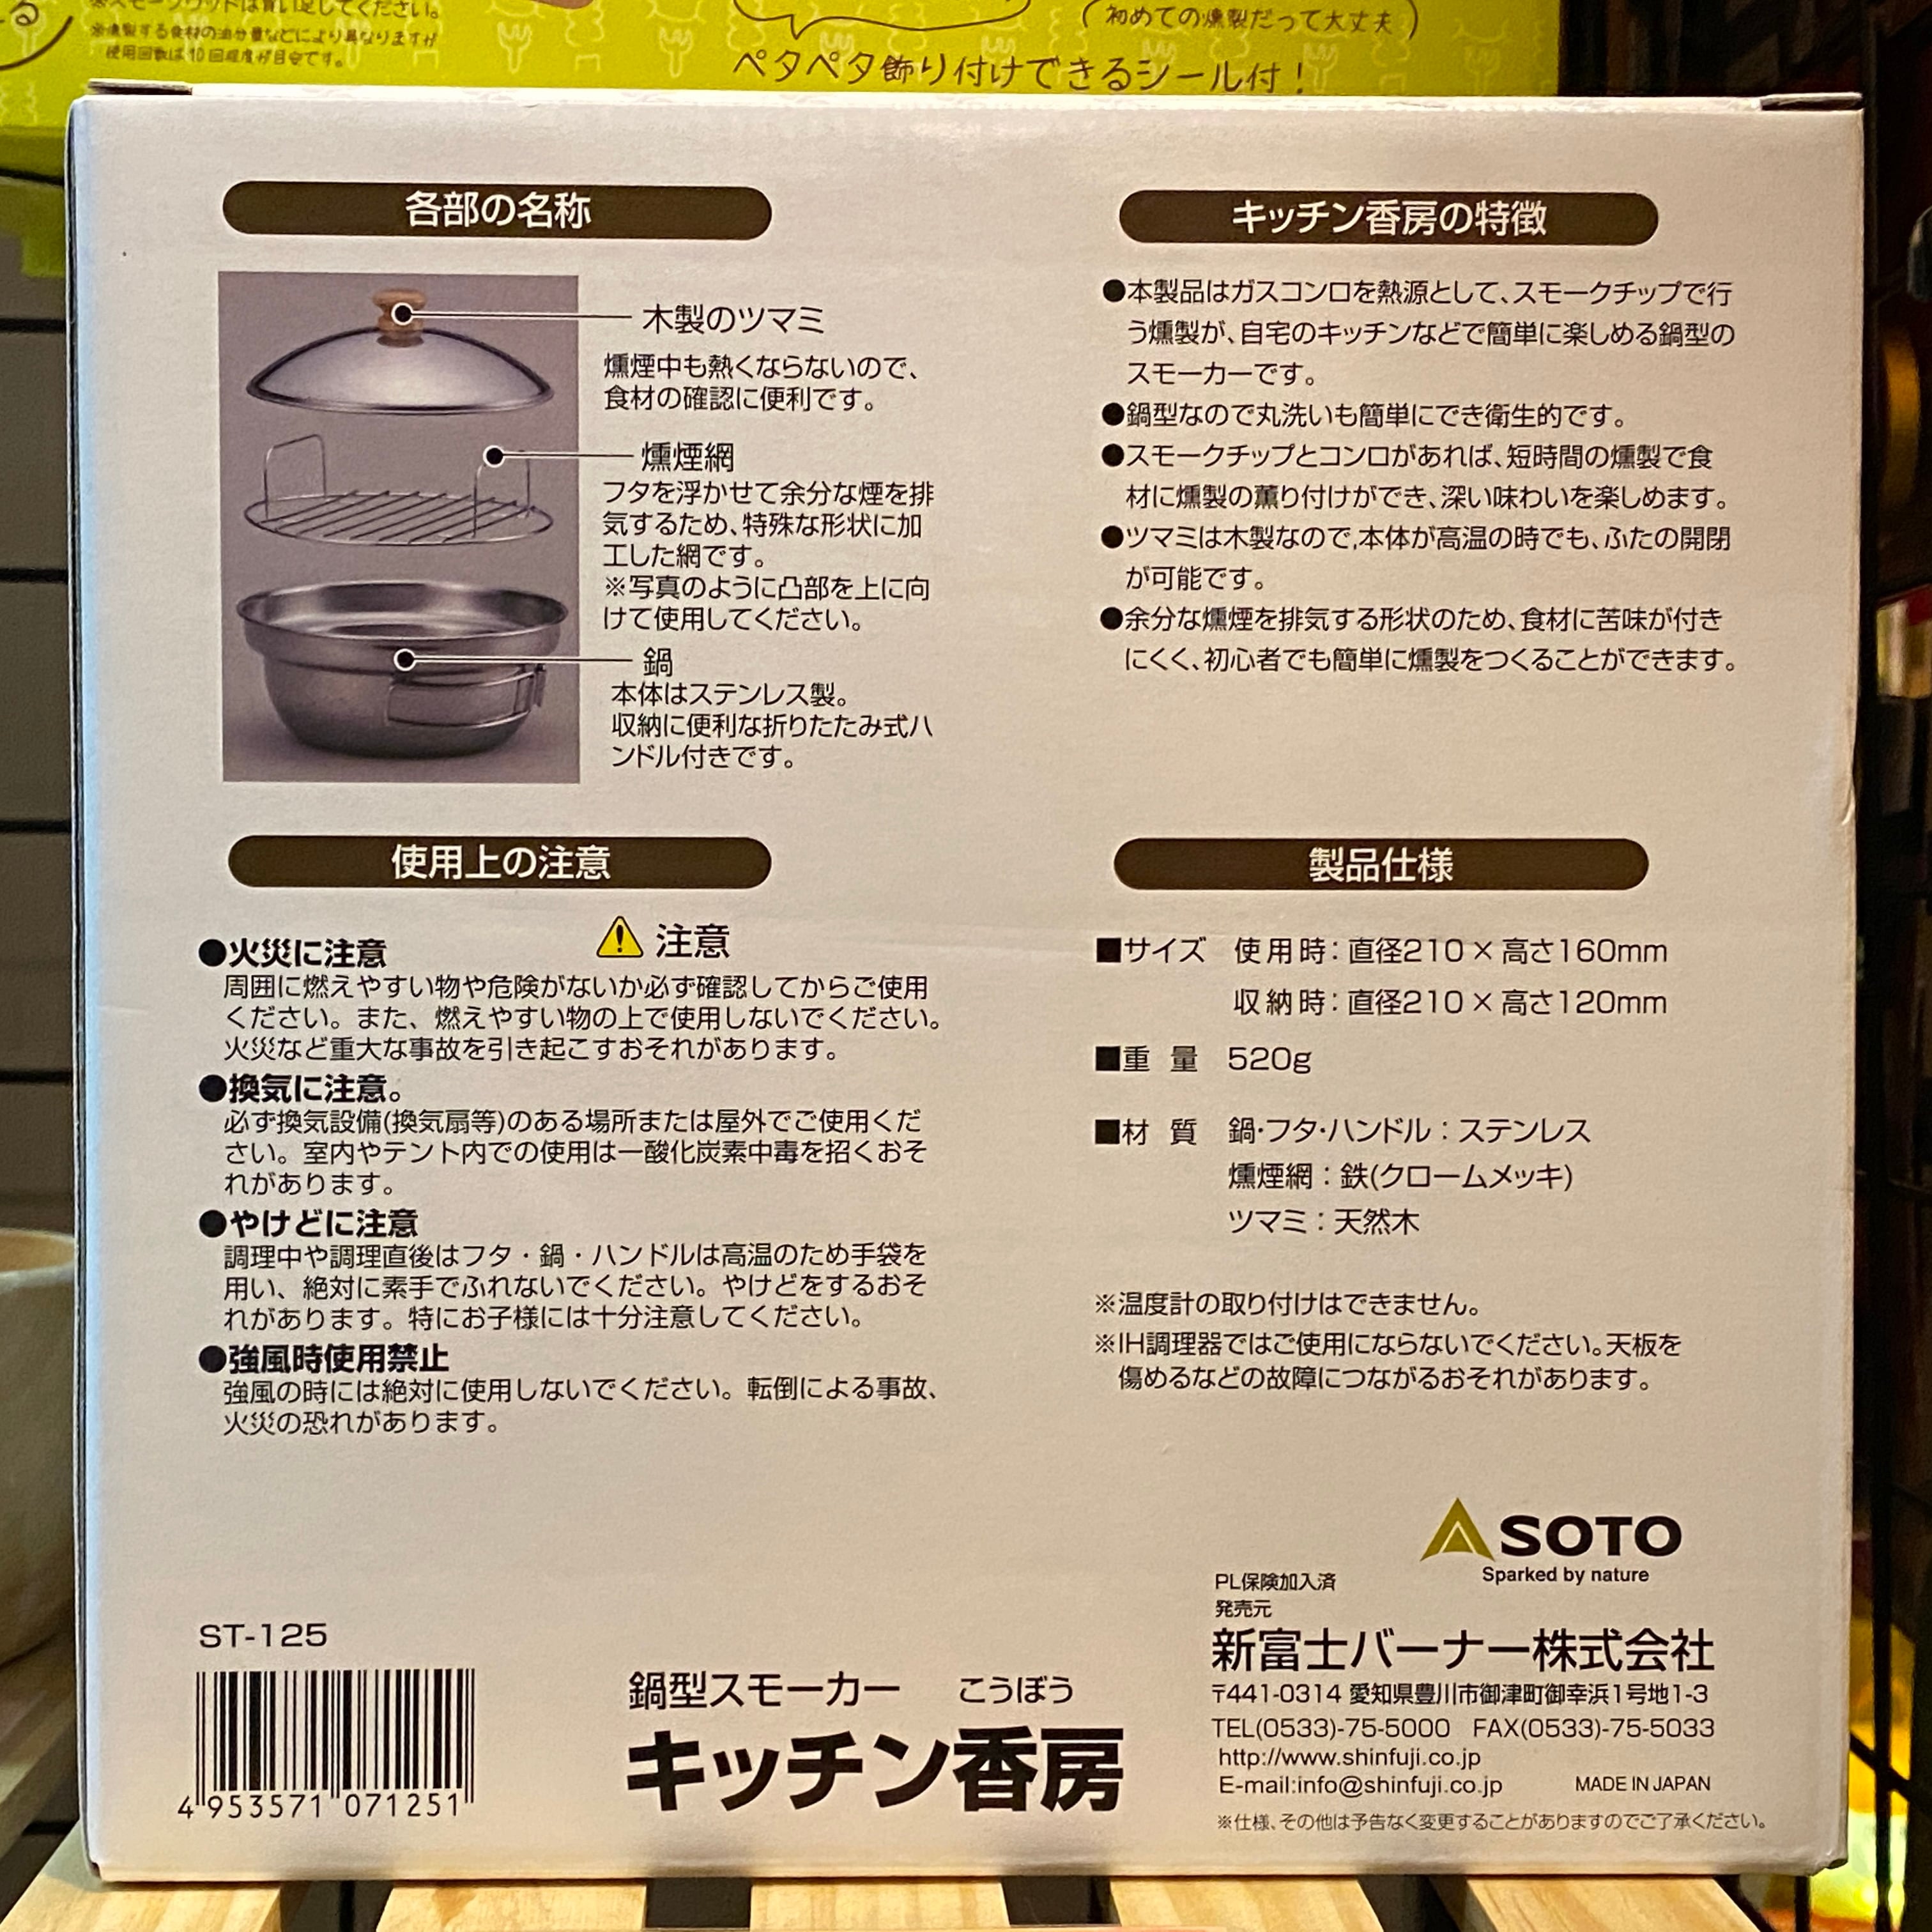 SOTO キッチン香房 ST-125